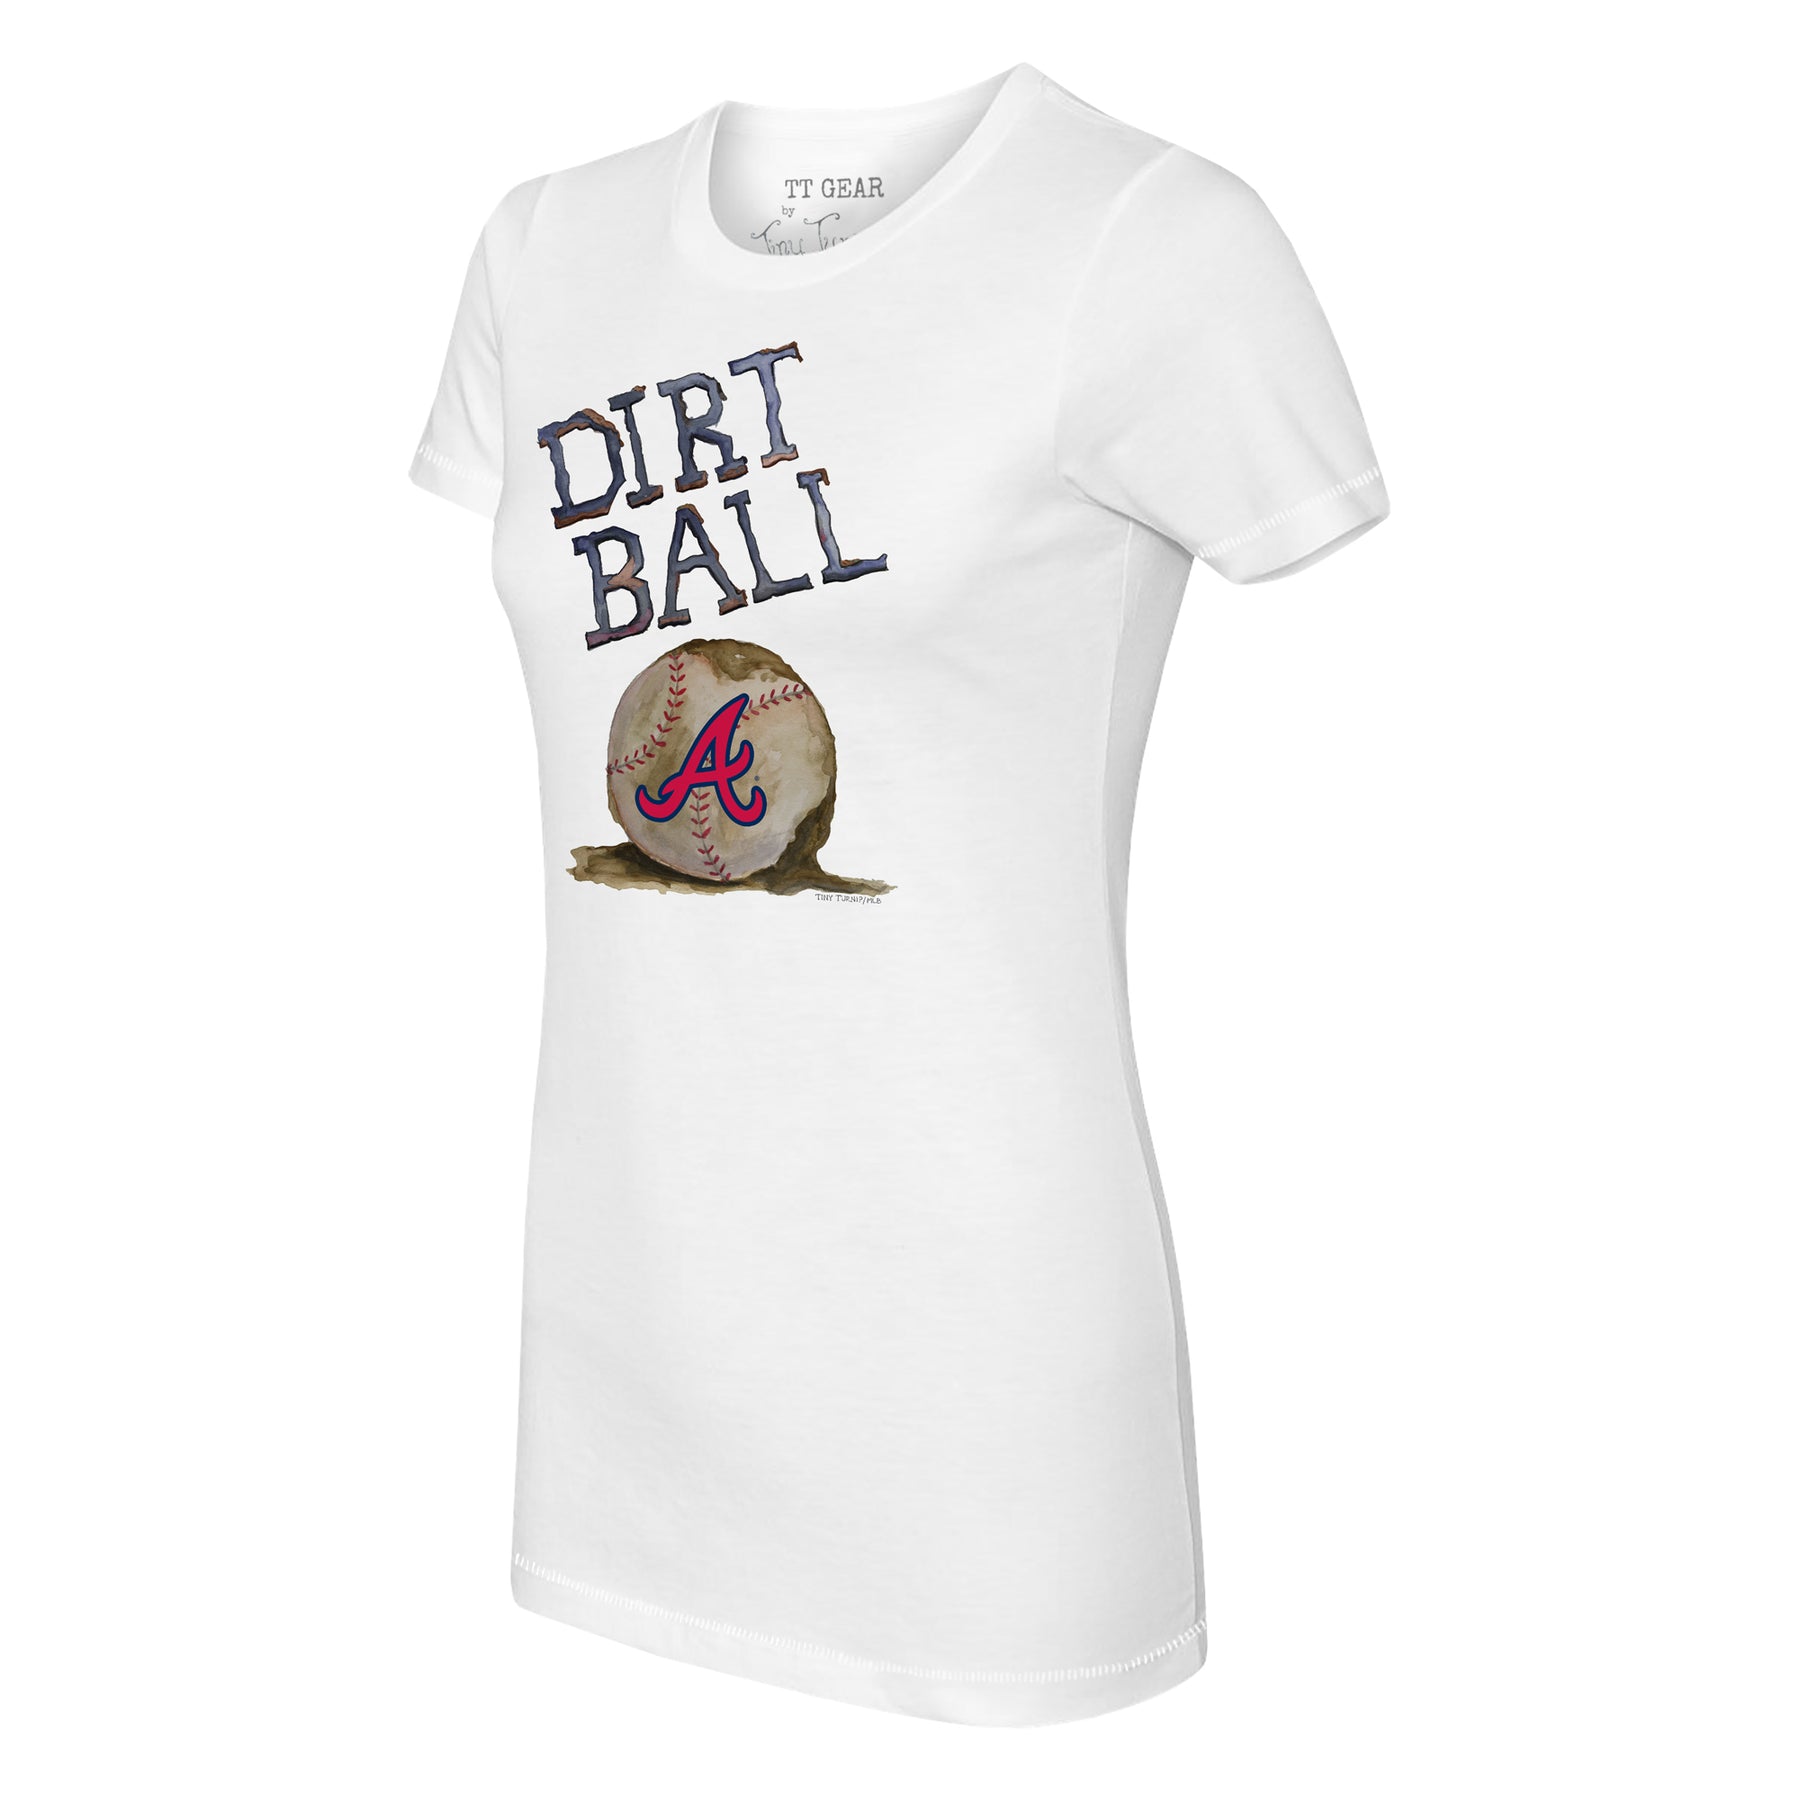 Atlanta Braves Dirt Ball Tee Shirt Youth Large (10-12) / White